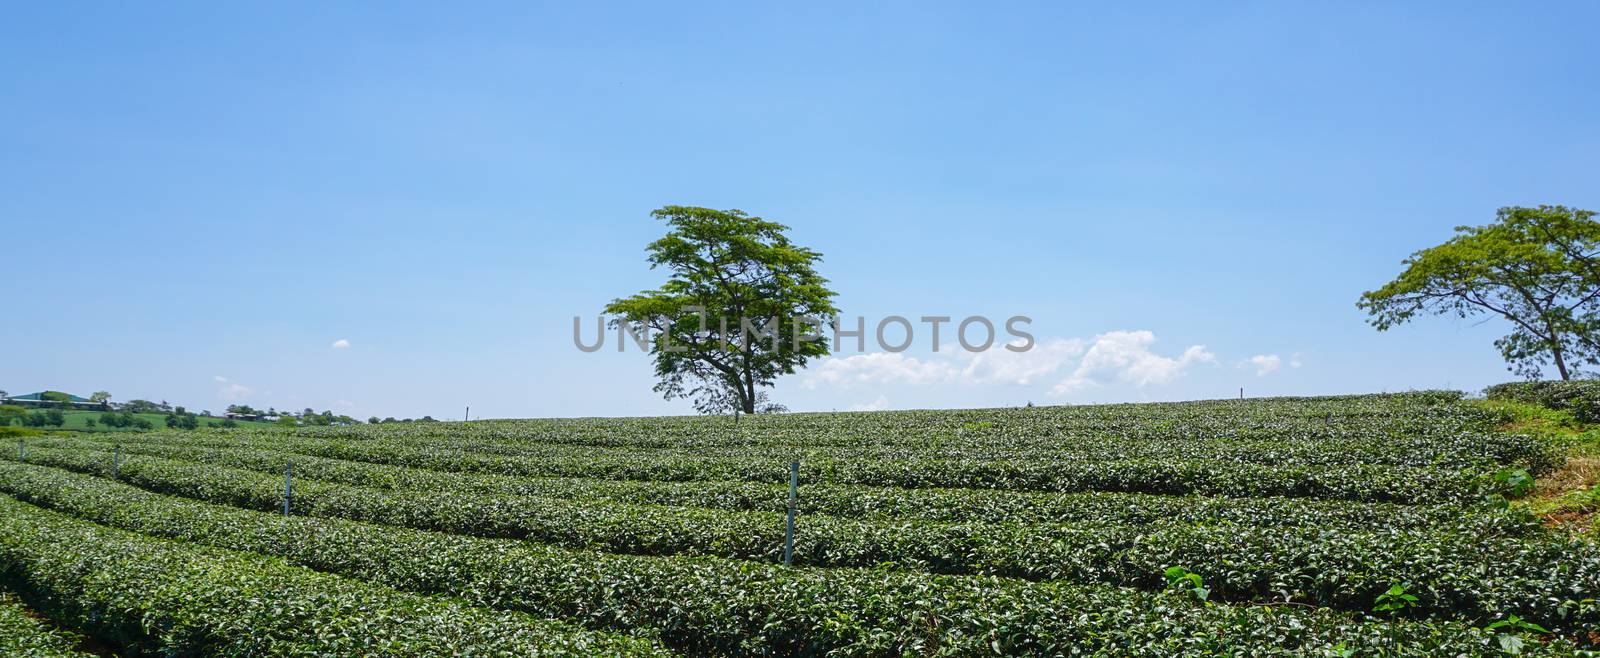 Tea farm at Bao Loc highland by vietimages